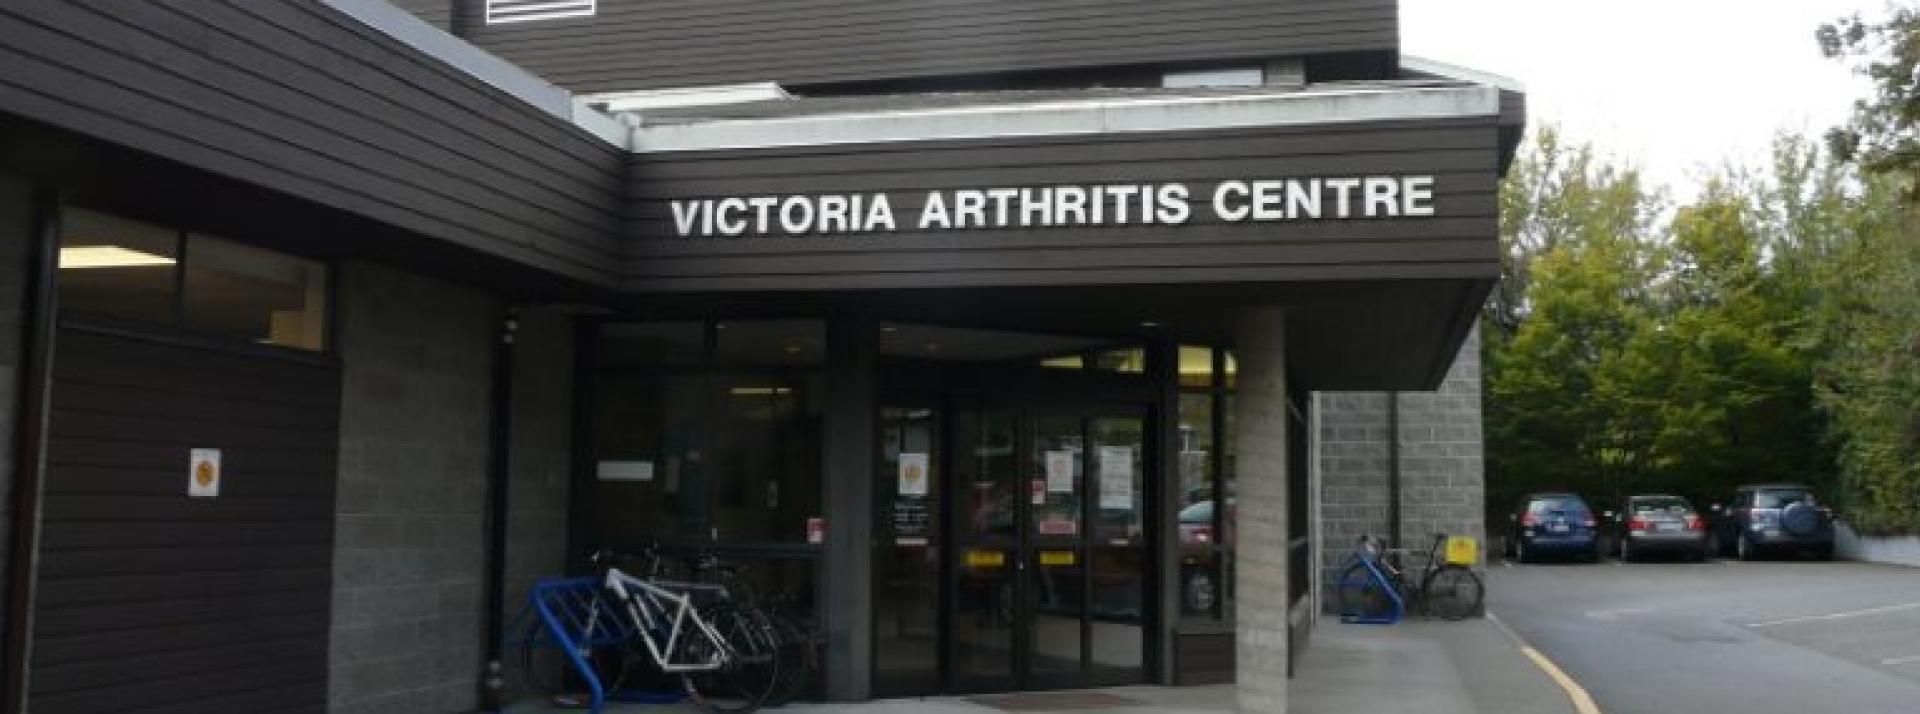 Front entrance of Victoria Arthritis Centre